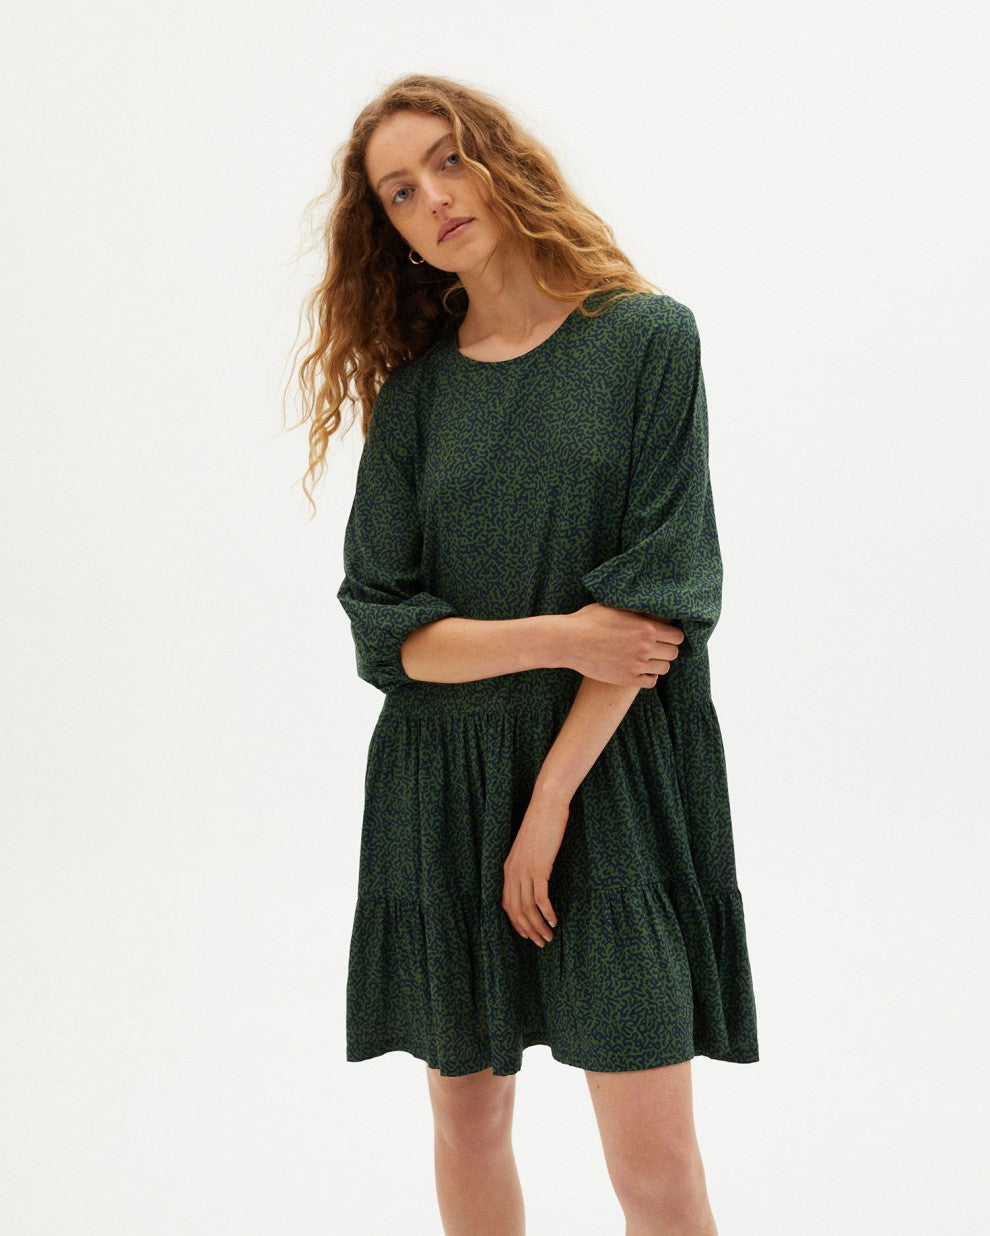 Lily Dress Green Lenzing Ecovero Viscose